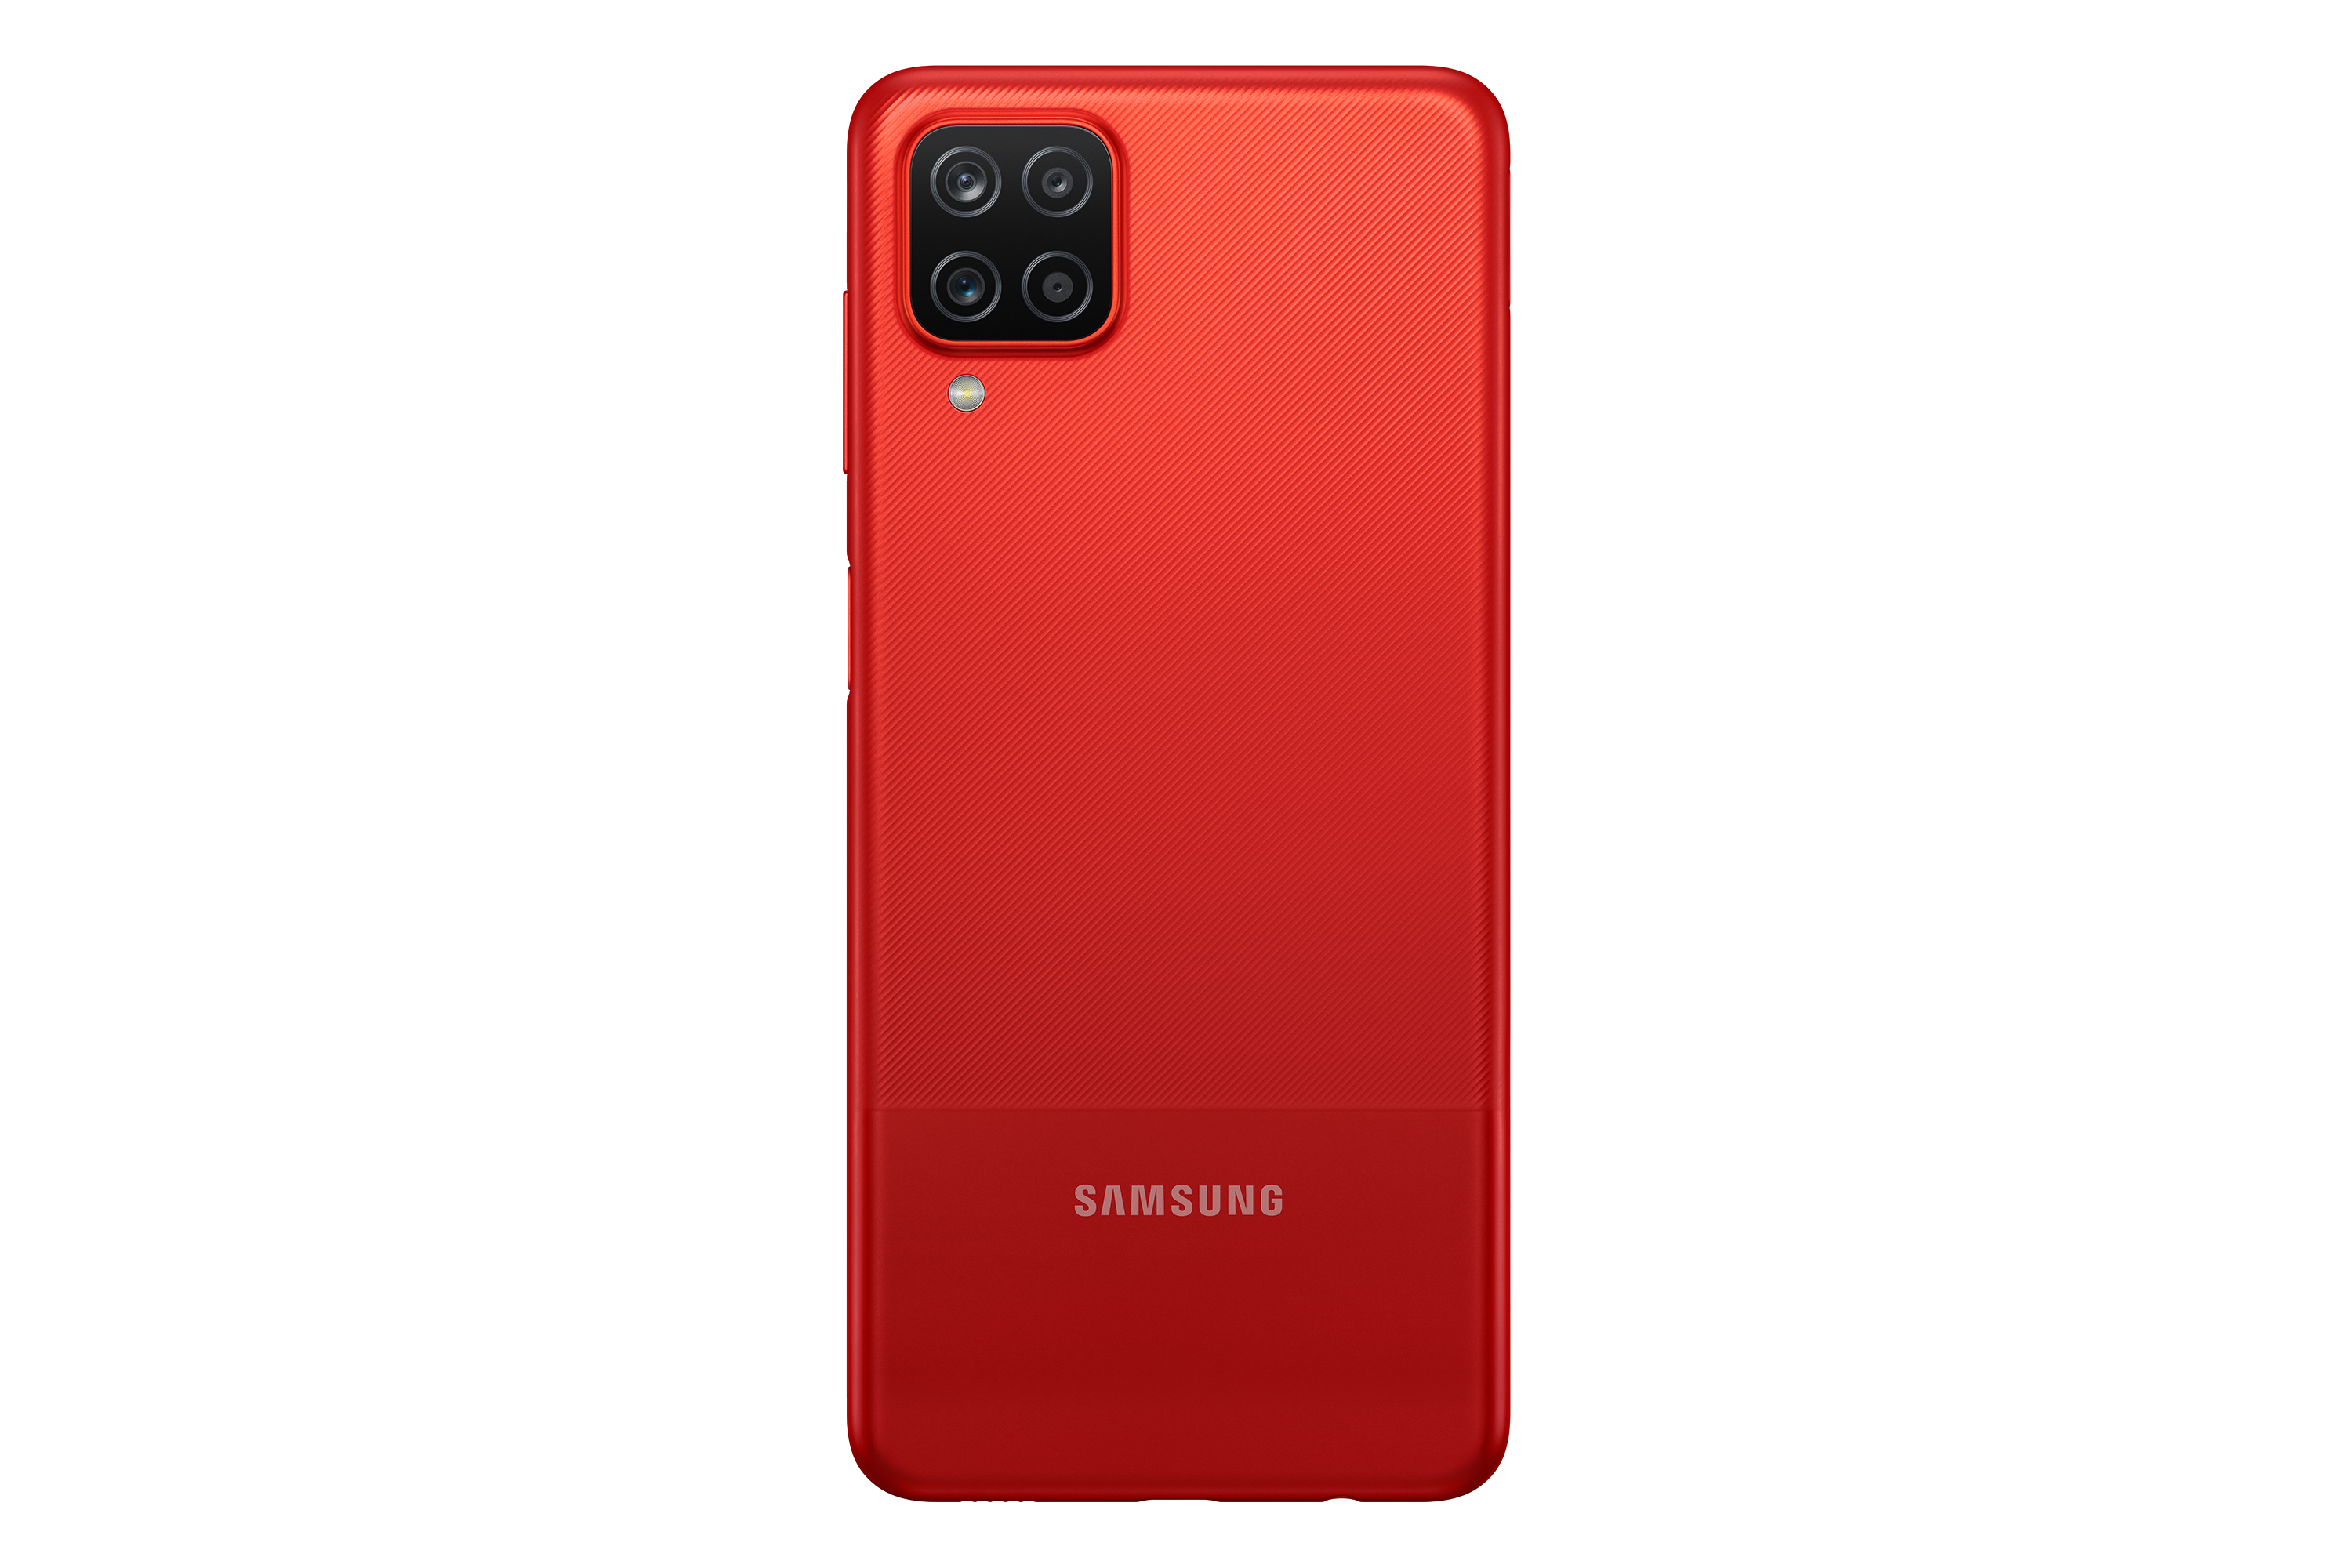 Красный телефон 12. Samsung Galaxy a12 красный. Samsung Galaxy a12 64gb. Самсунг гелакси а 12 красный. Samsung Galaxy a12 64gb Red.